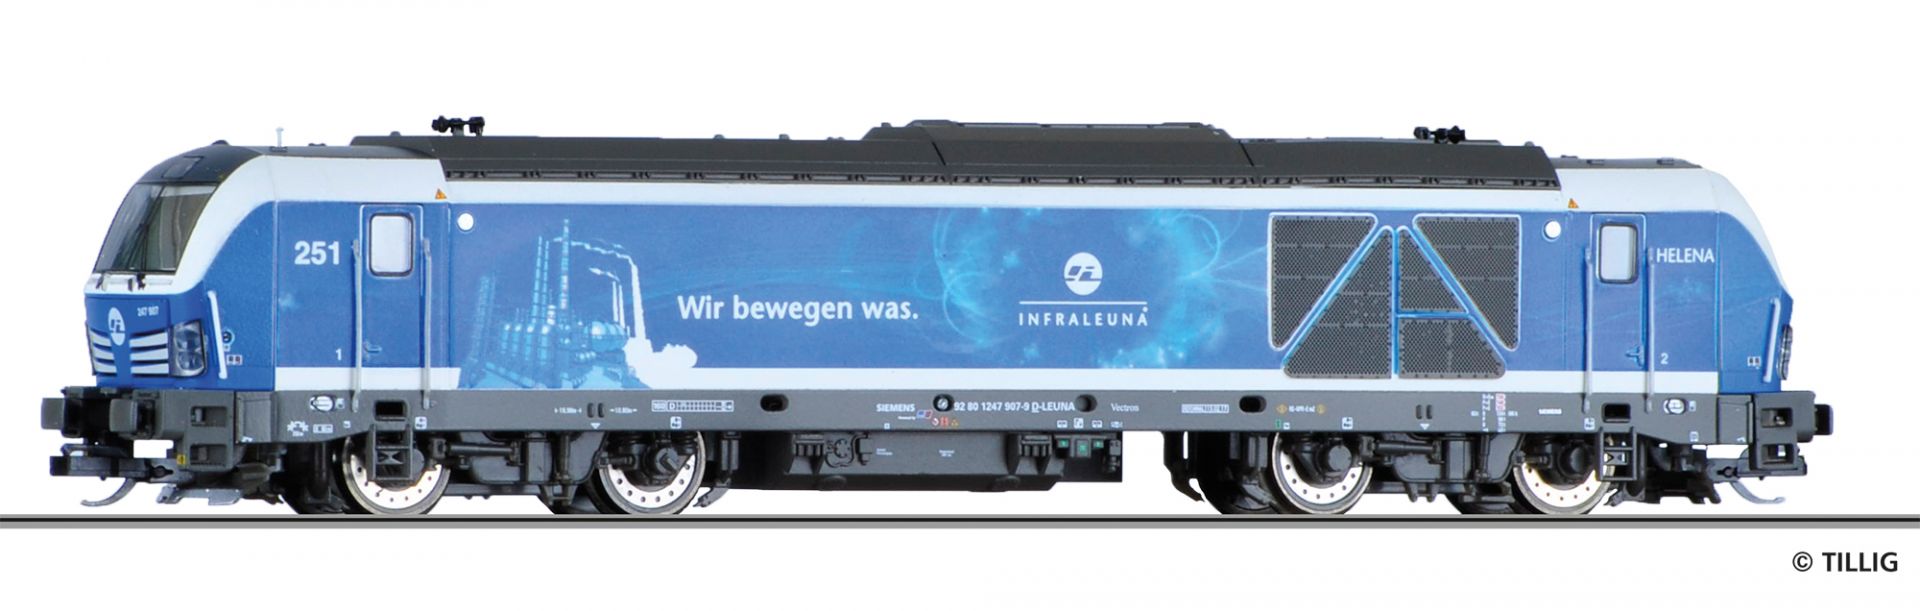 04850 | Diesellokomotive Infra Leuna GmbH